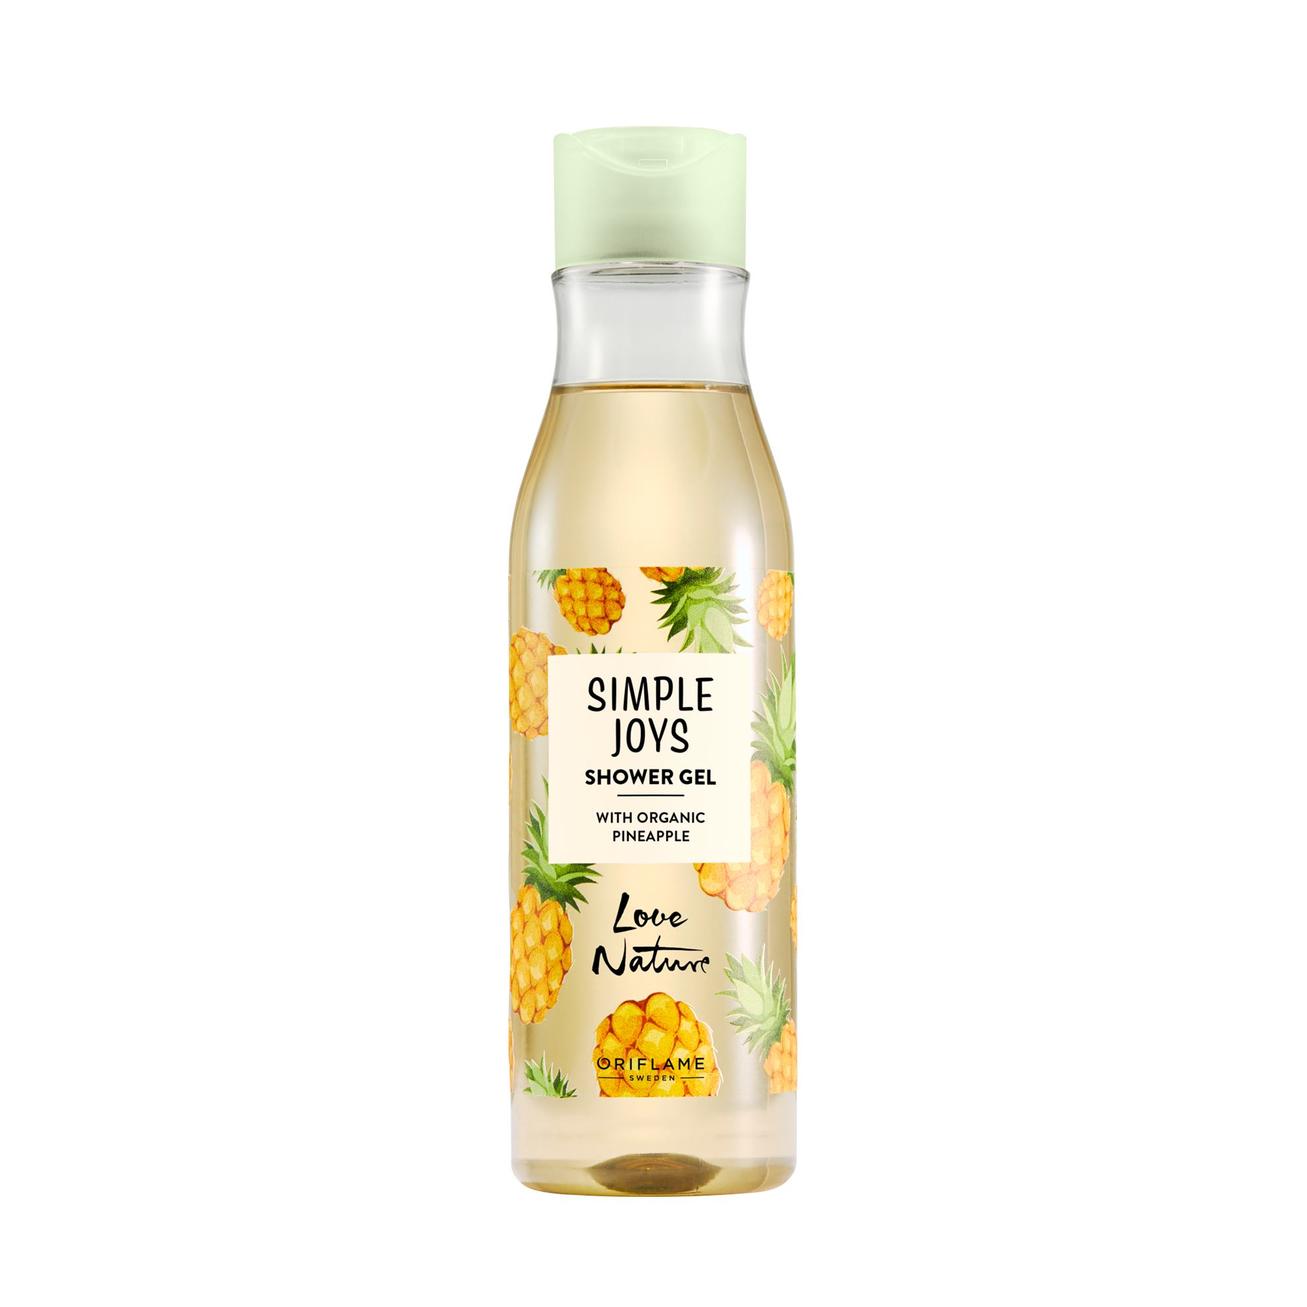 Aanbieding van Simple Joys Shower Gel with Organic Pineapple Love Nature voor 5,49€ bij Oriflame